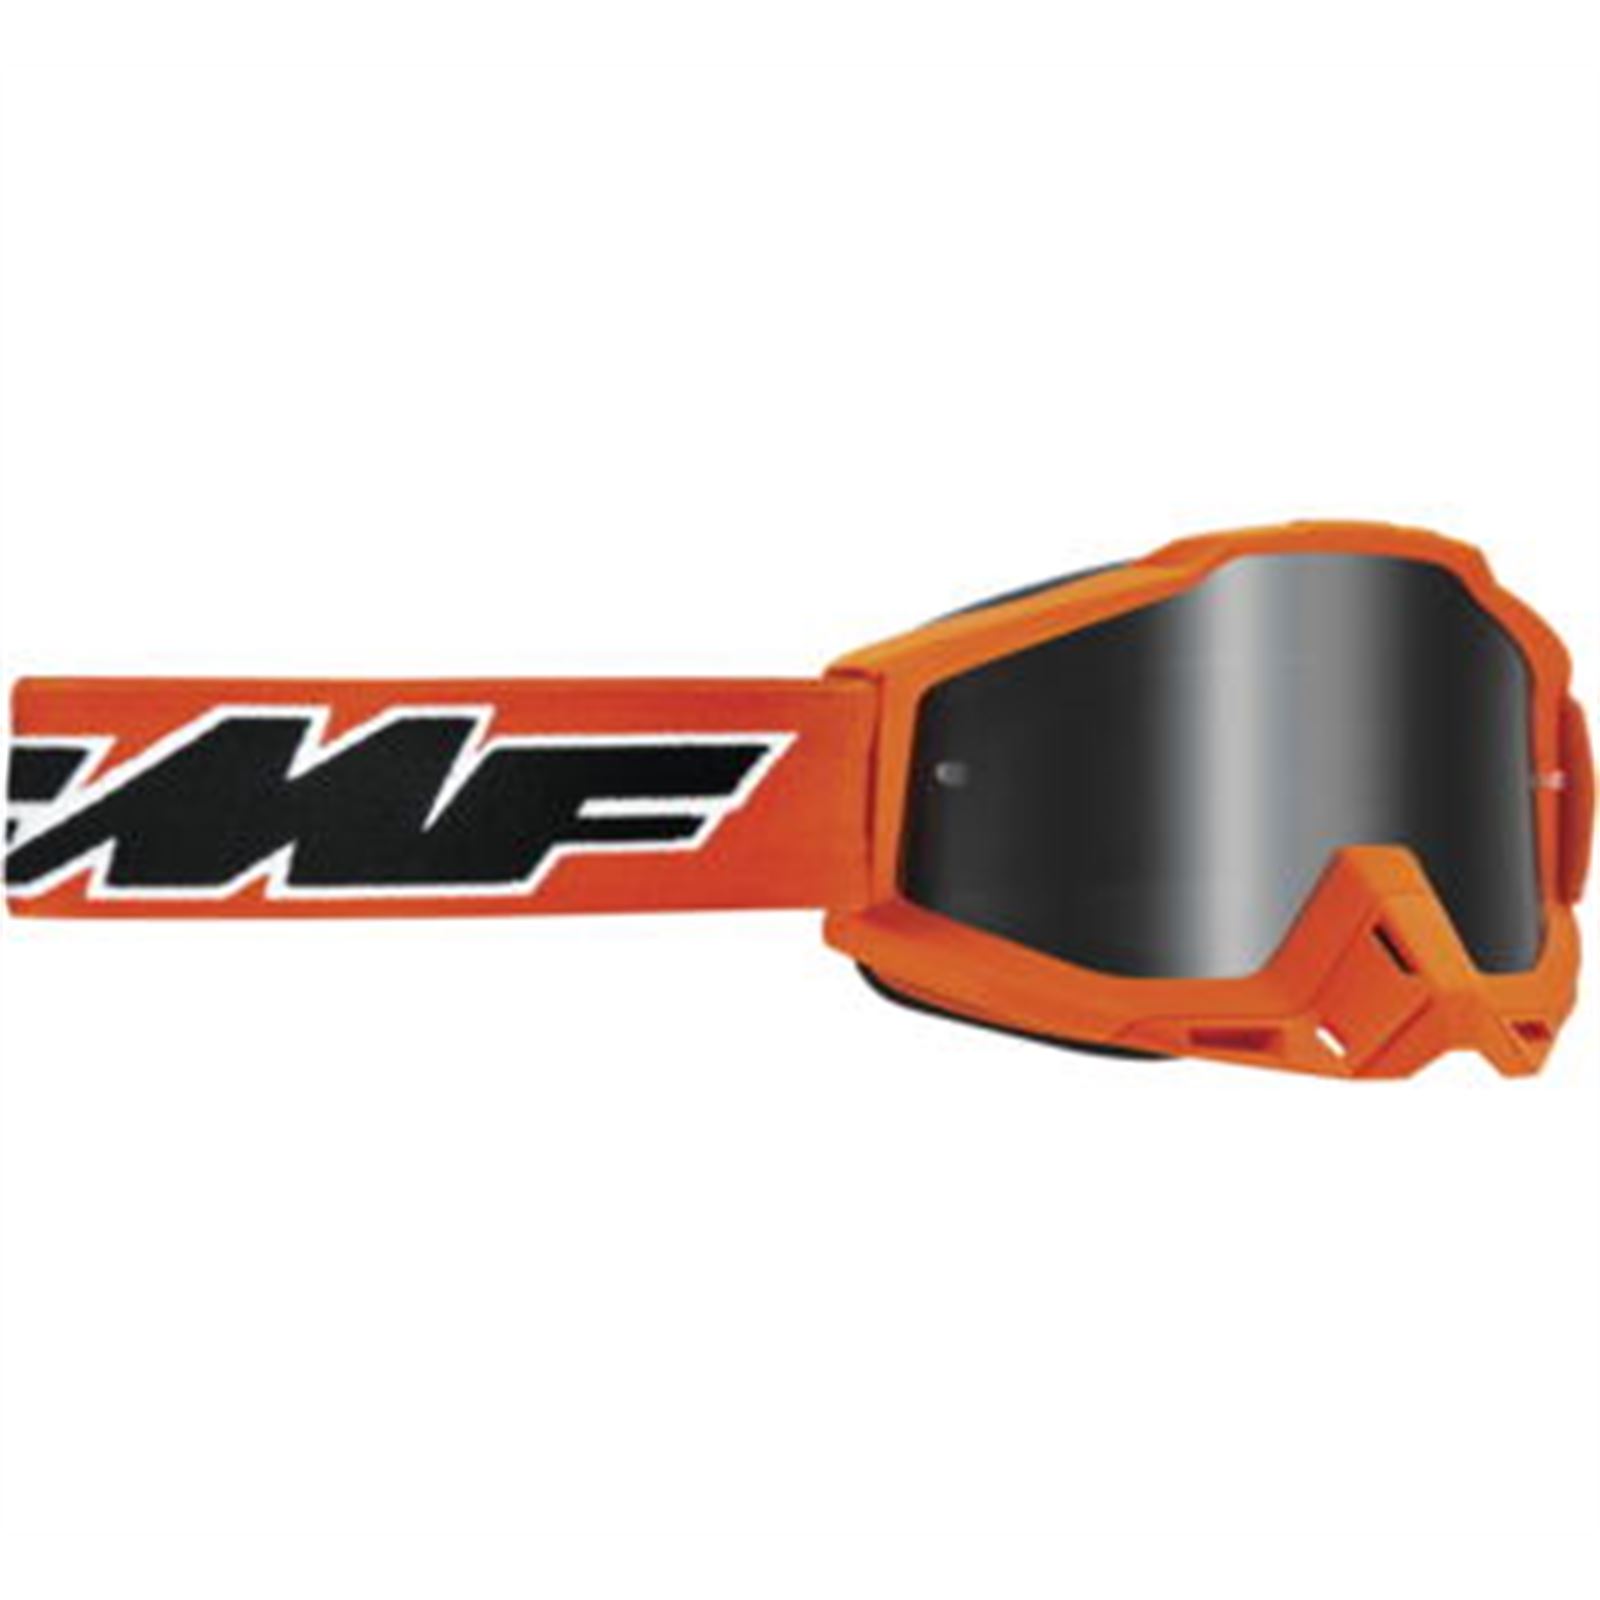 FMF Racing PowerBomb Sand Goggles - Rocket Orange with Smoke Lens